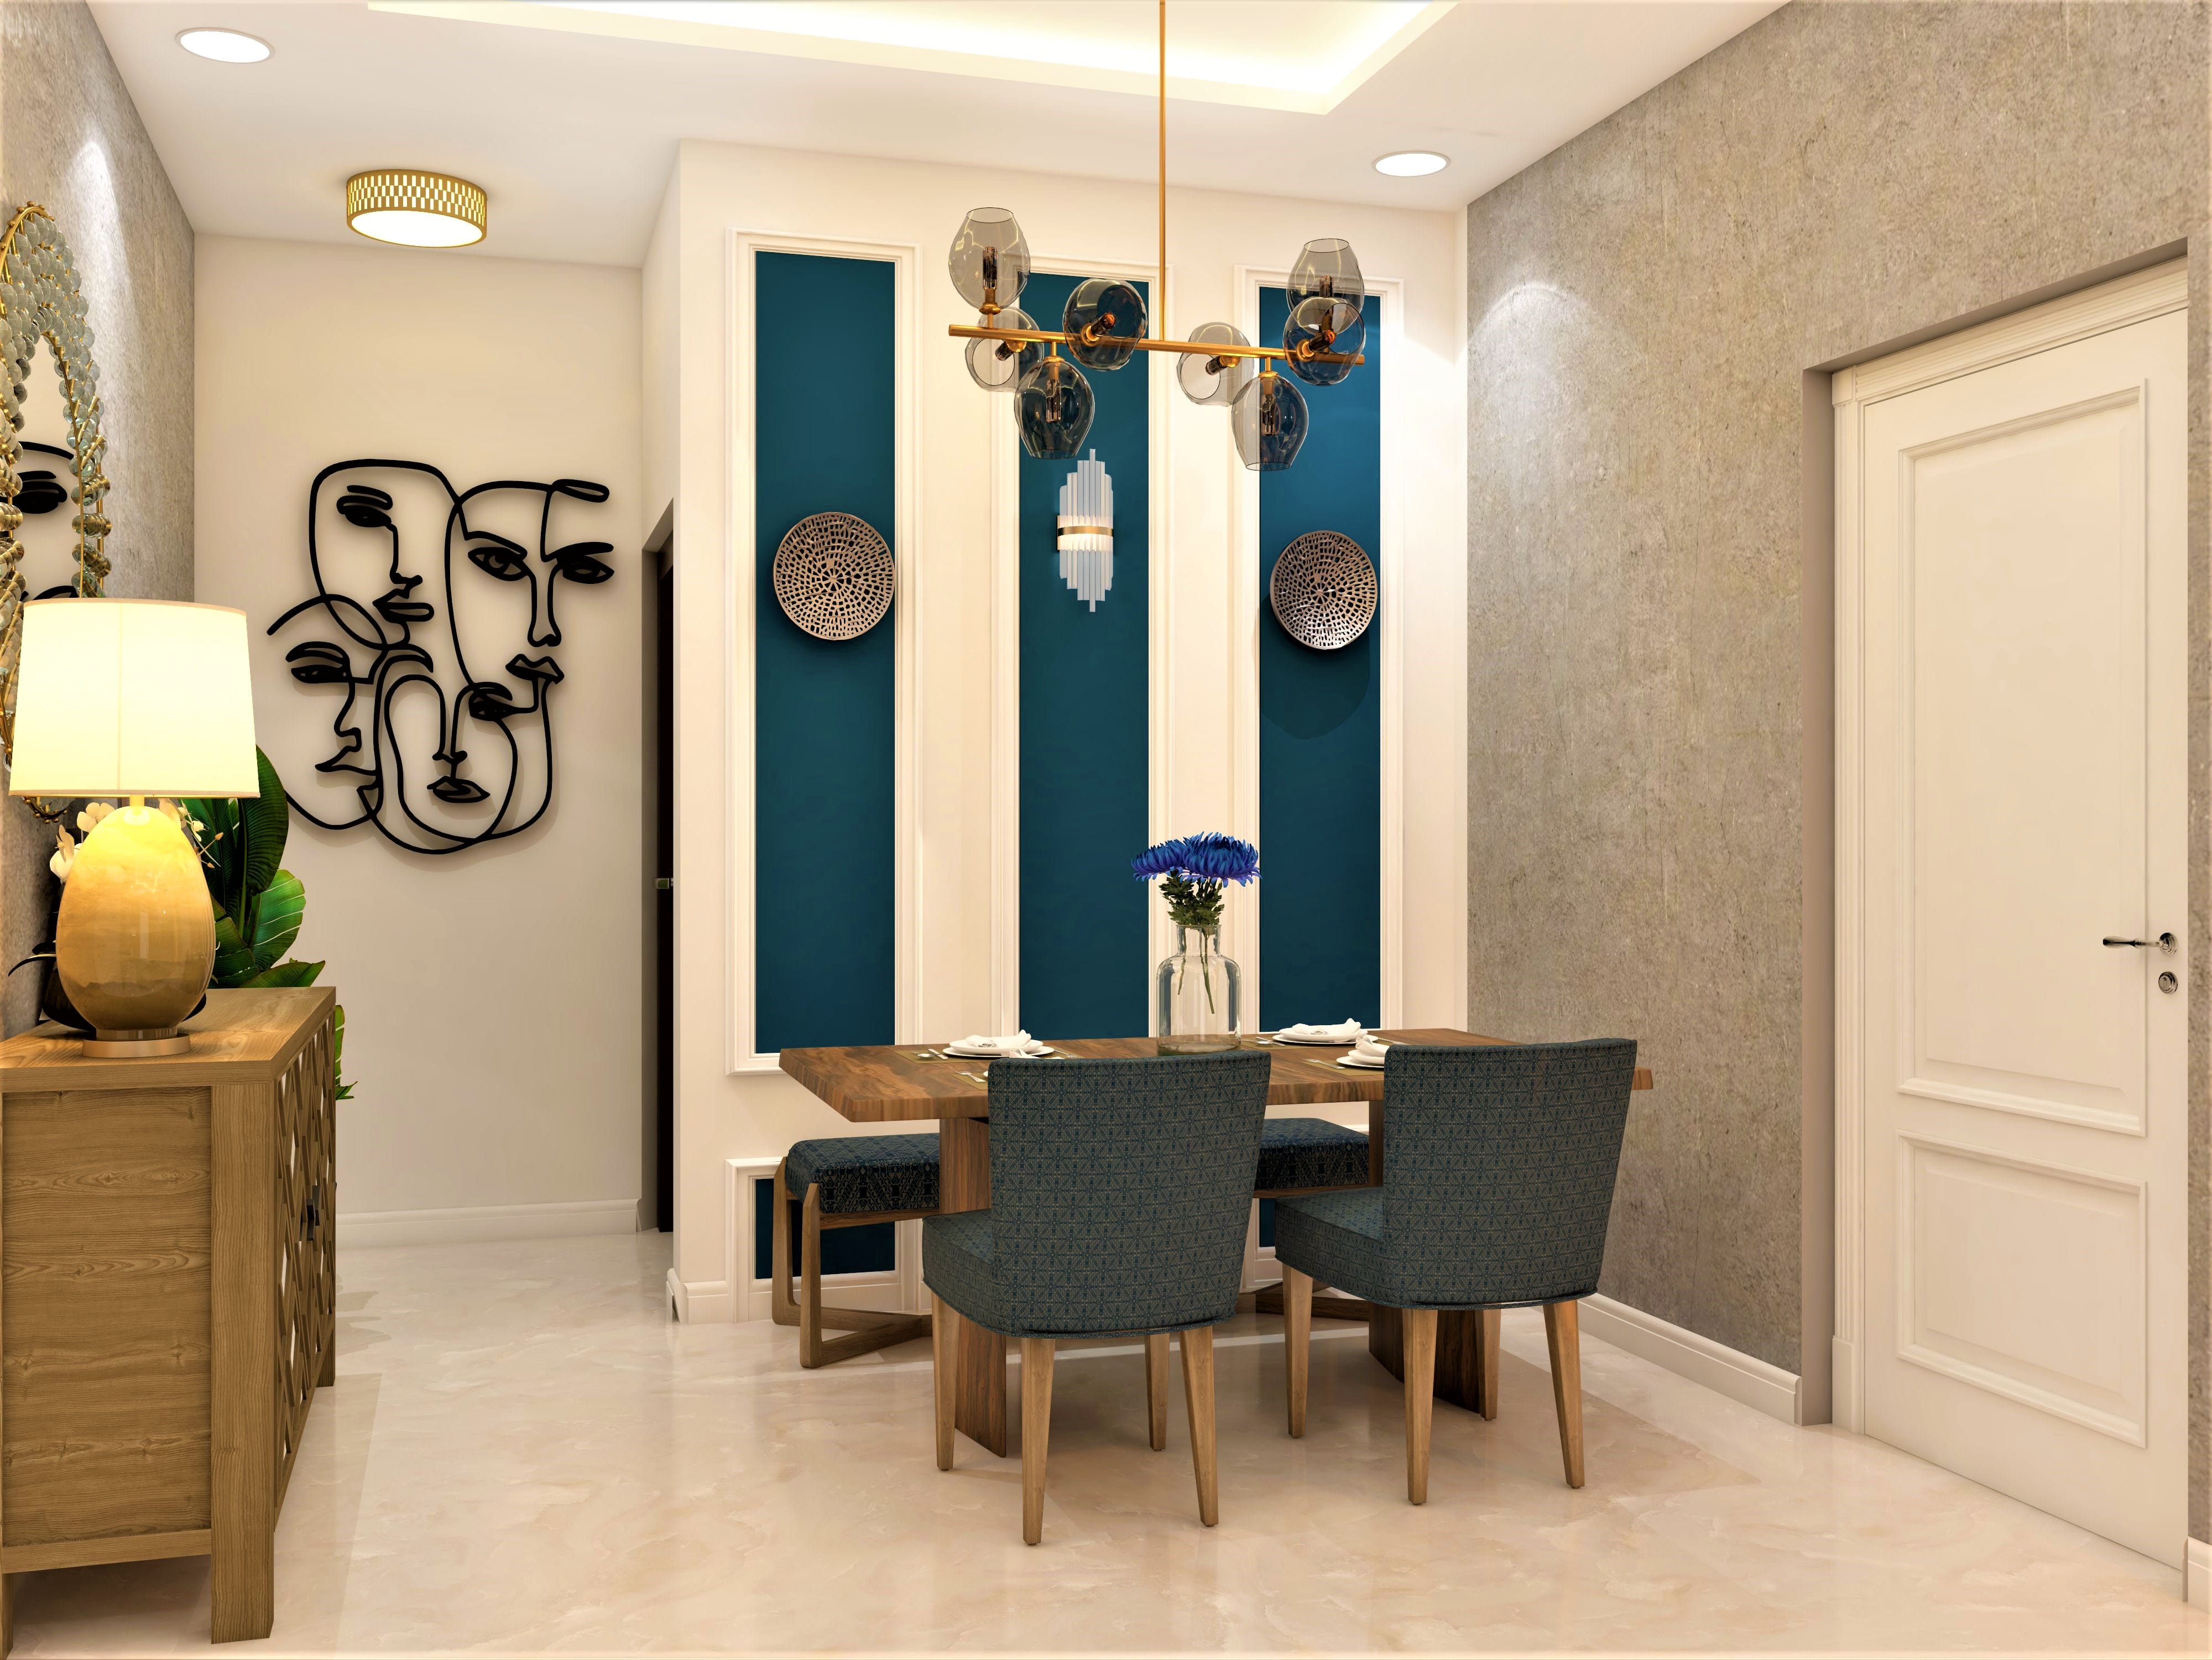 Modern dining room design with elegant decor - Beautiful Homes